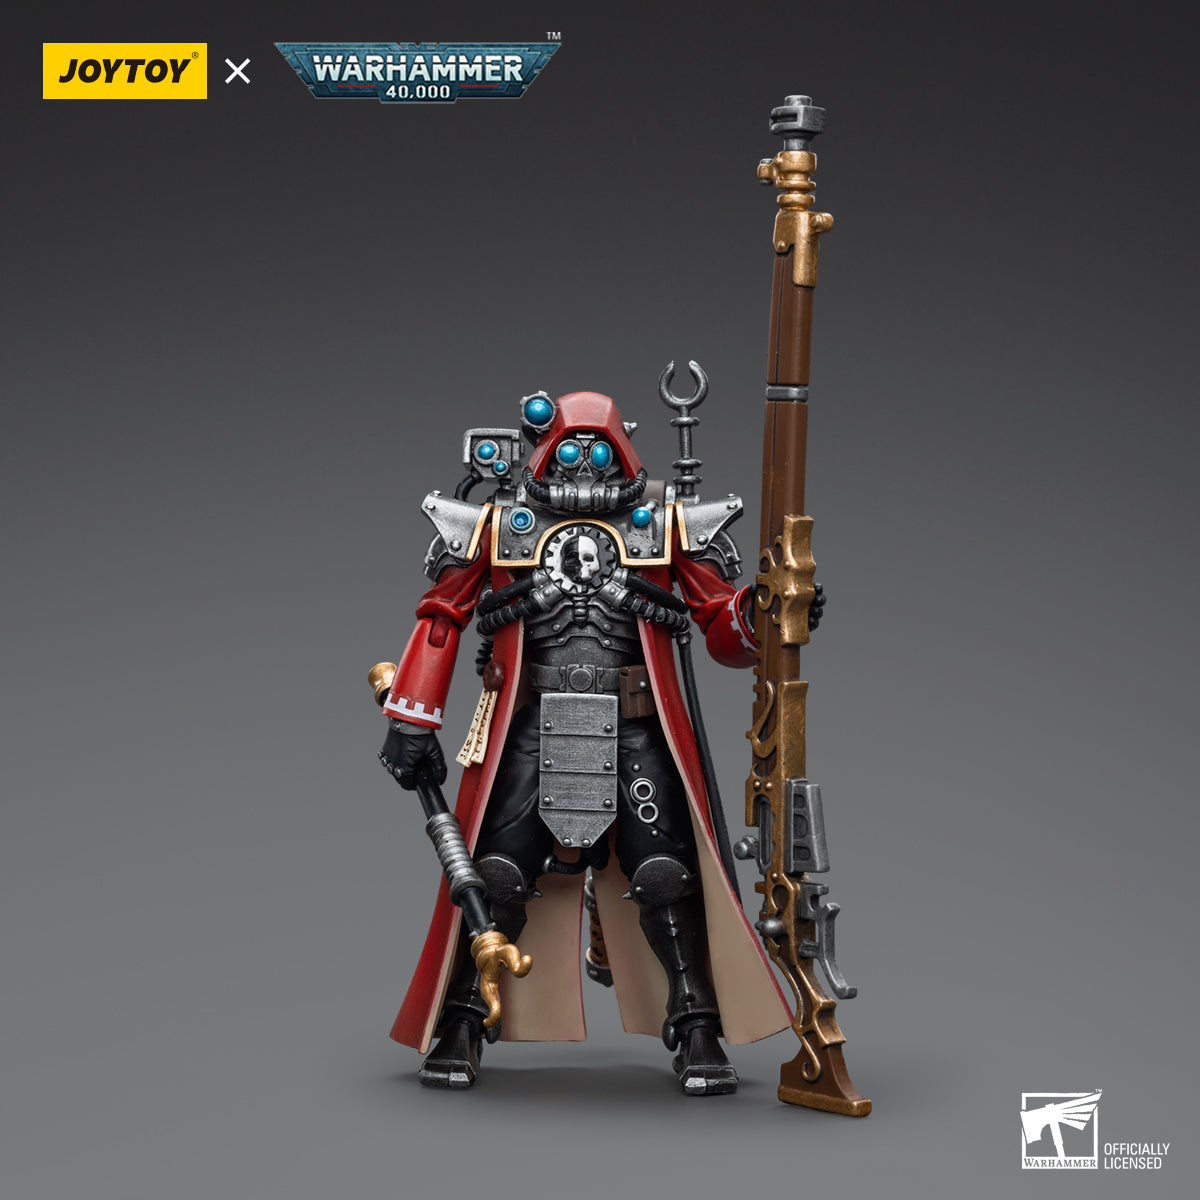 Warhammer Collectibles: 1/18 Scale Adeptus Mechanicus Skitarii Ranger with Transuranic Arquebus